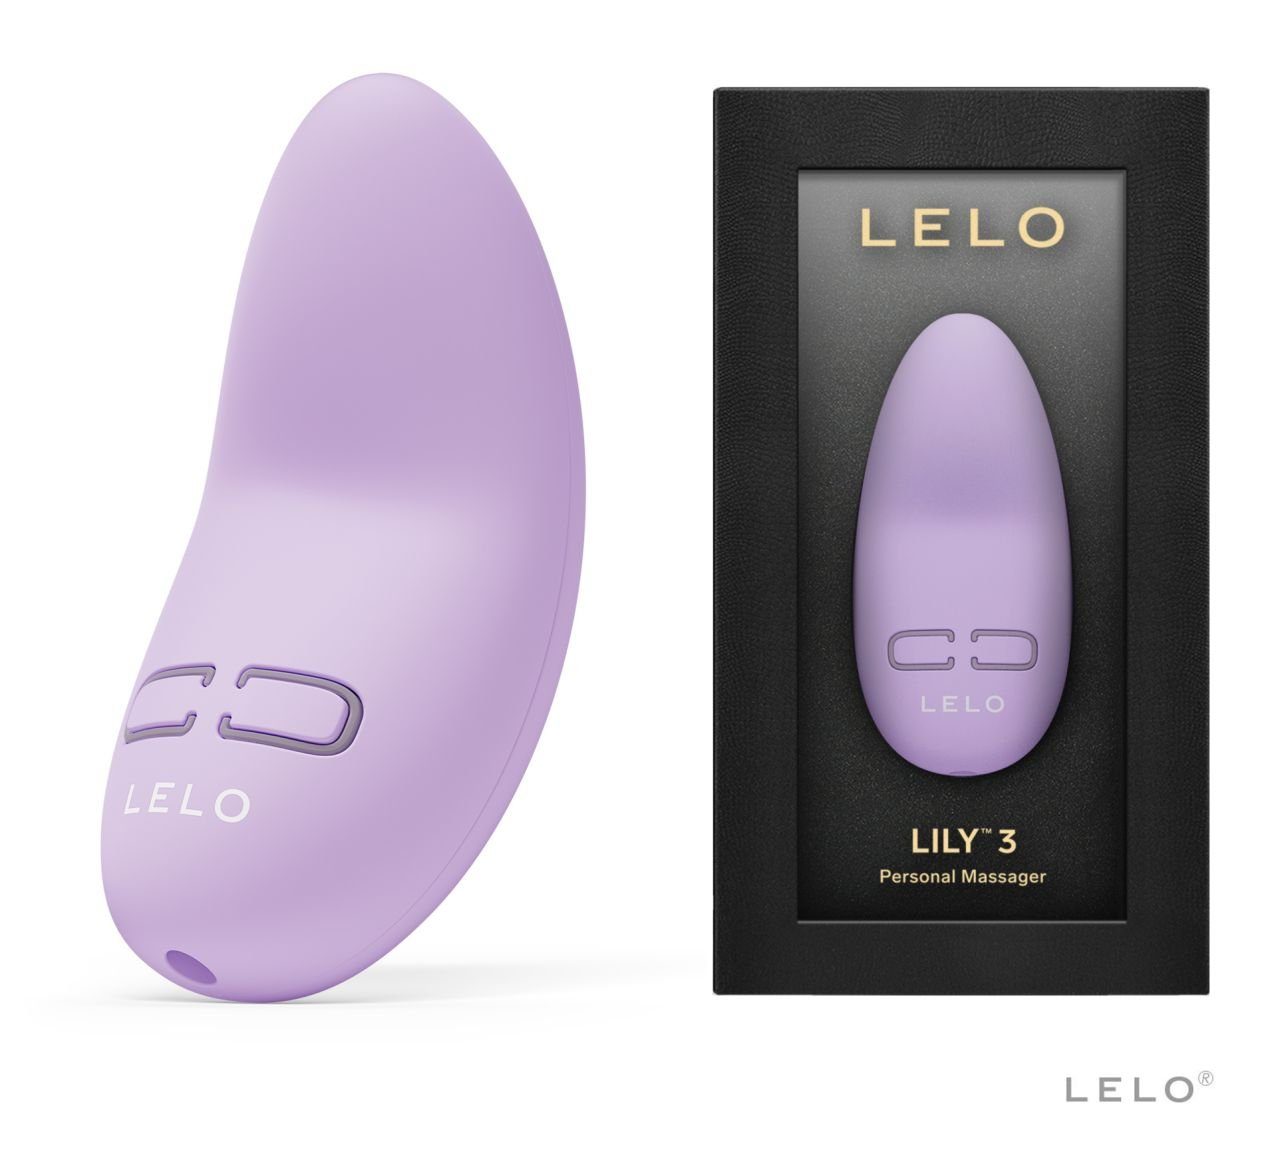 3 Lelo Lily Calm Lavender, LELO wasserdicht Mini-Vibrator